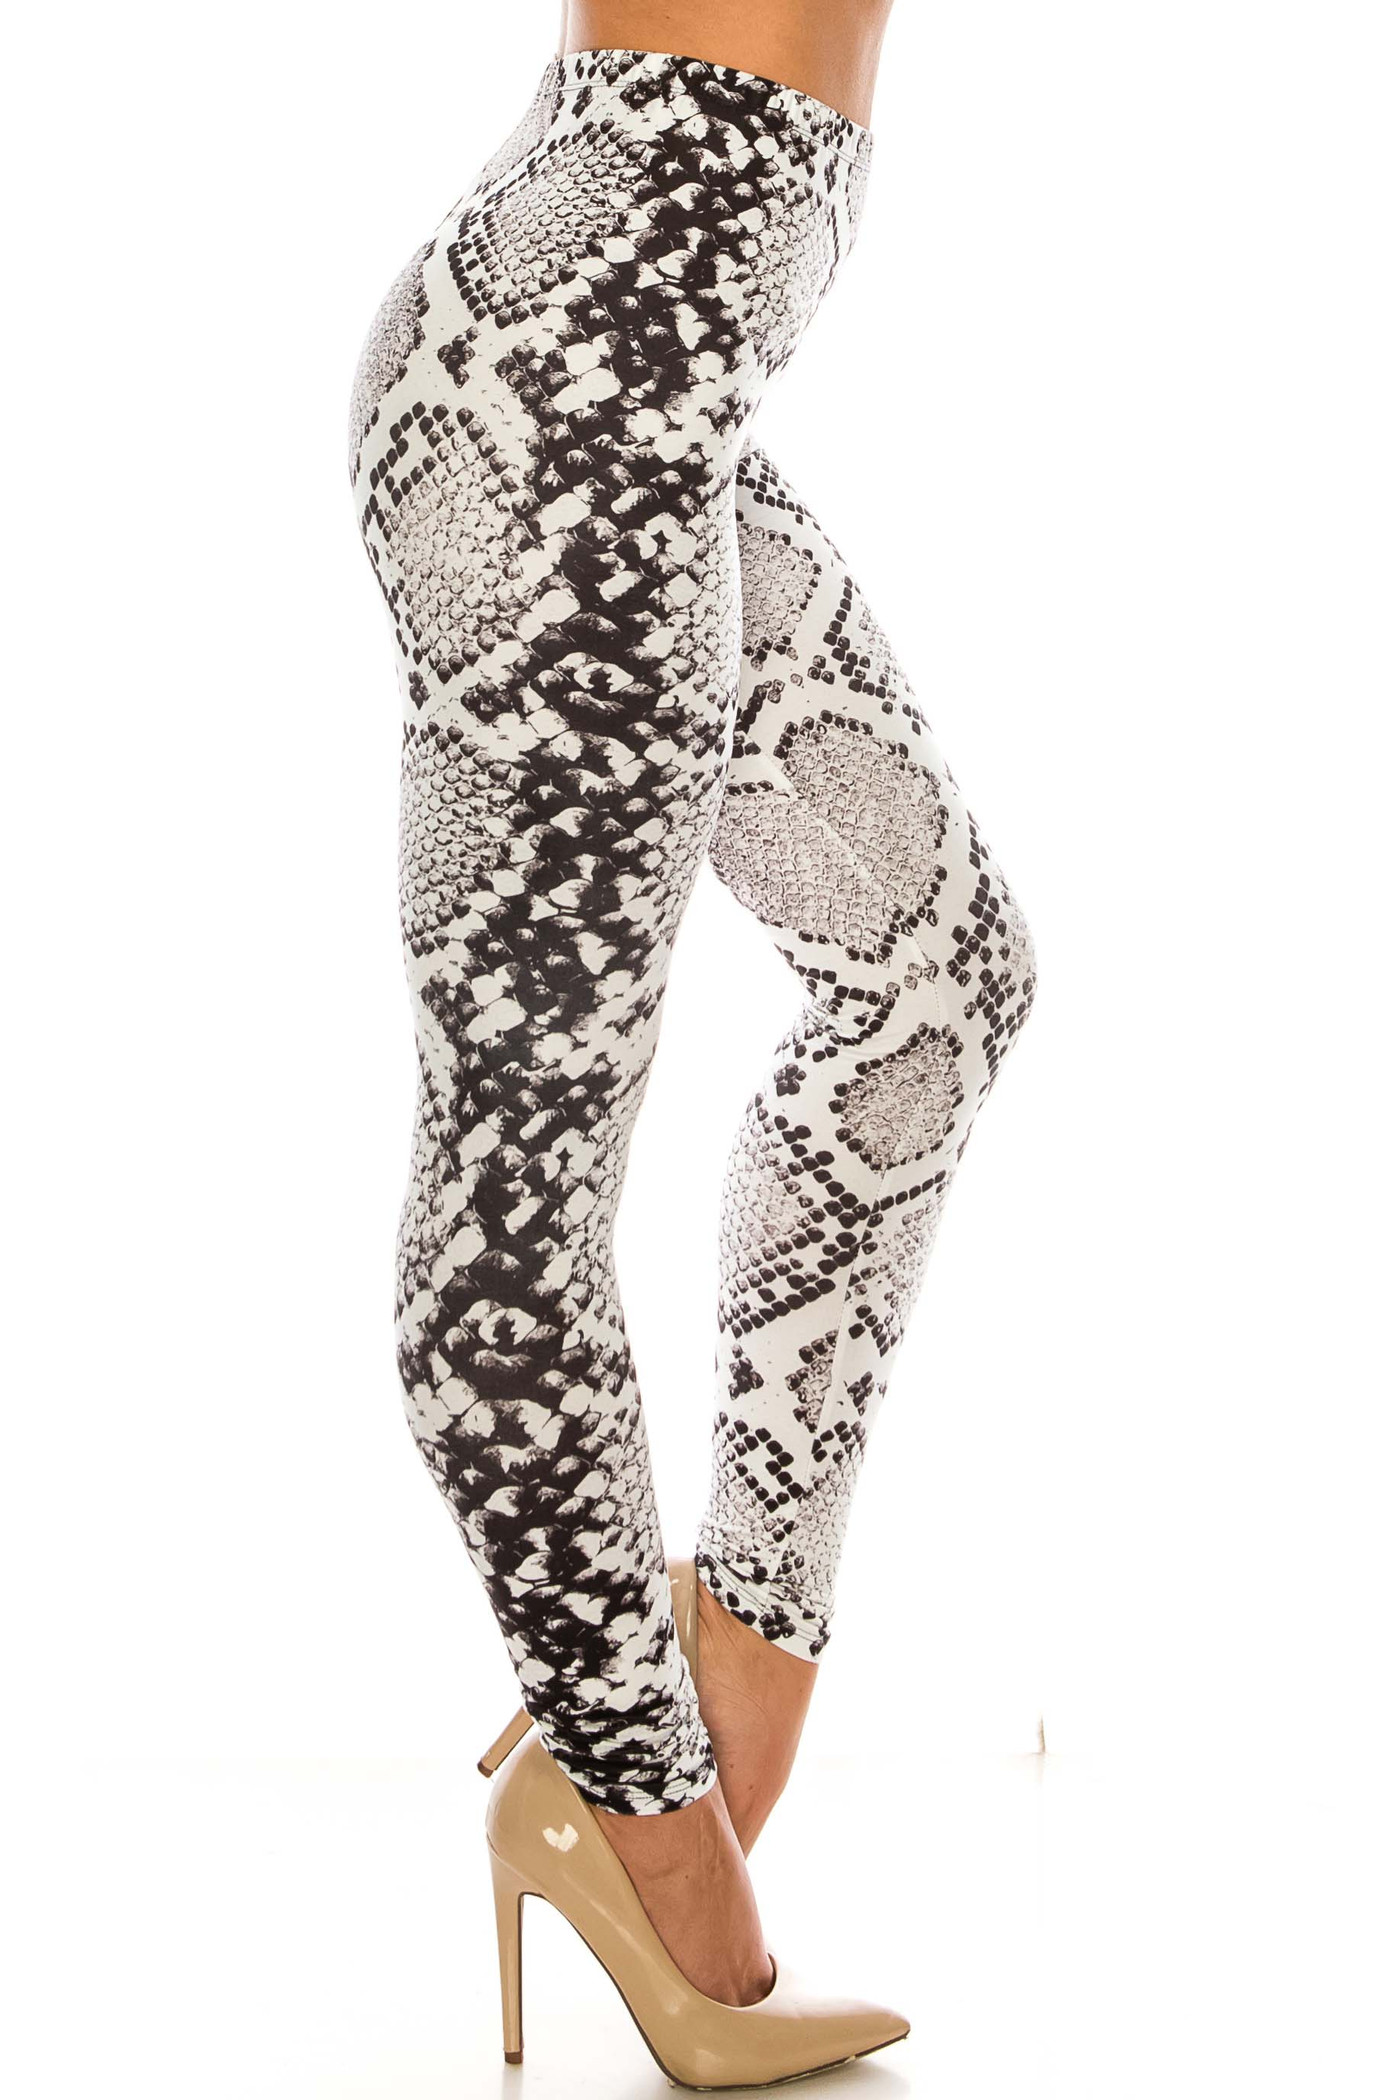 Creamy Soft Ivory Python Extra Plus Size Leggings - 3X-5X - USA Fashion™